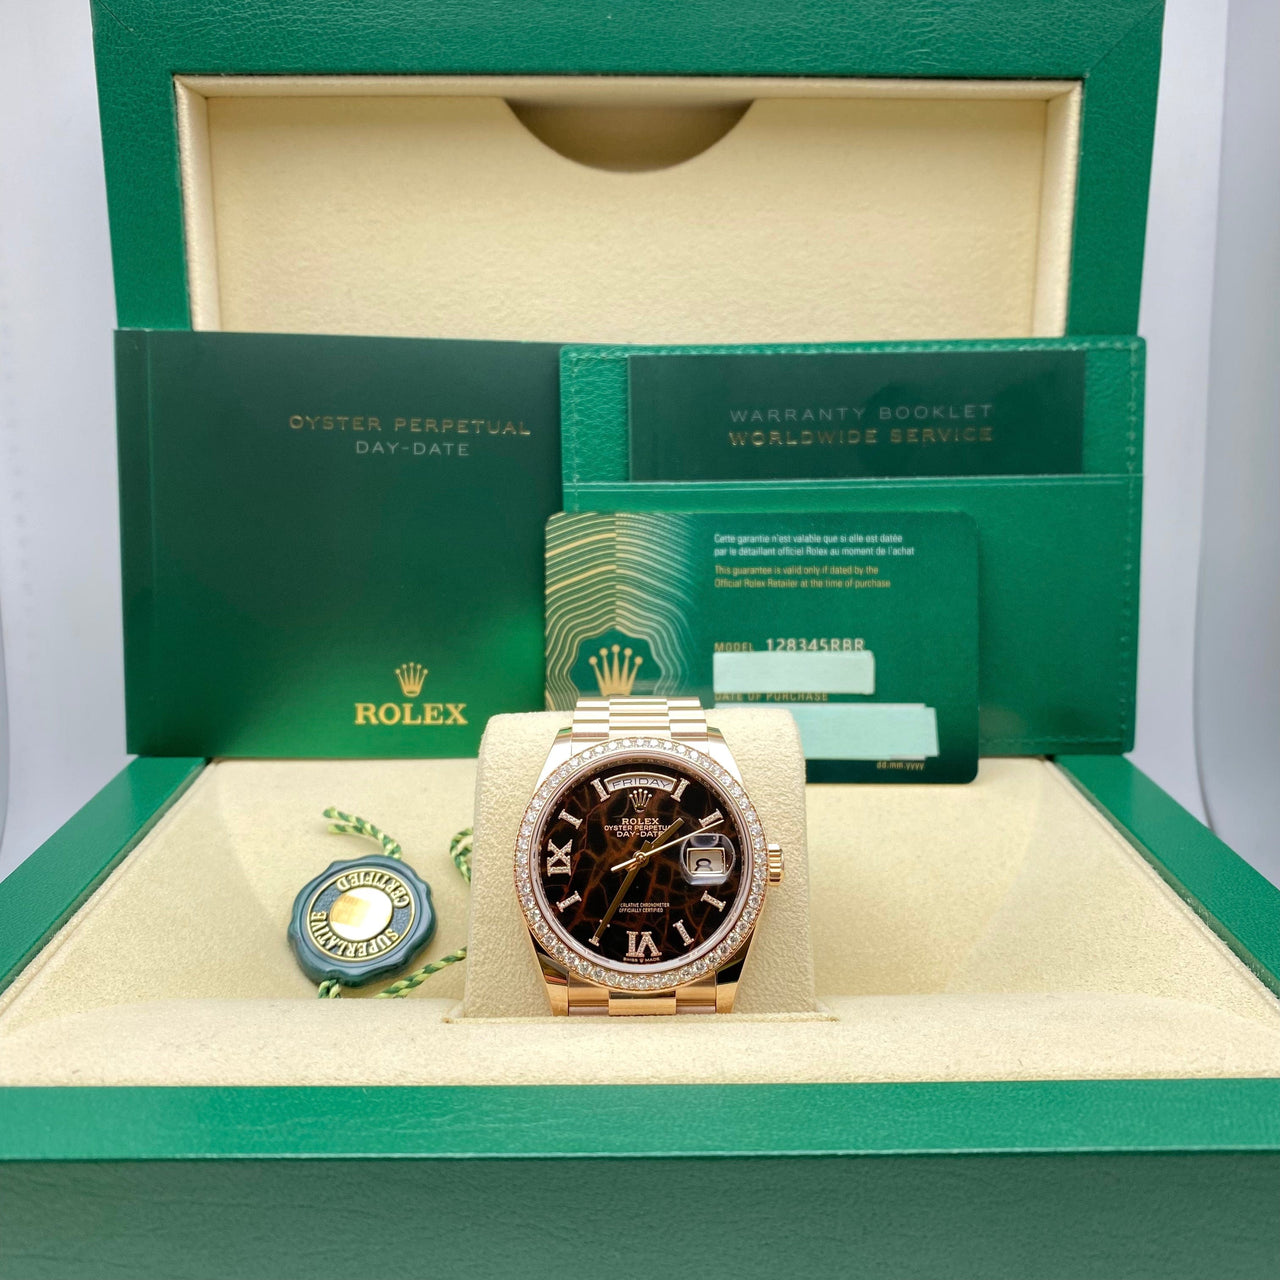 Luxury Watch Rolex Day-Date 36 Rose Gold Eisenkiesel Diamond Dial 128345RBR Wrist Aficionado